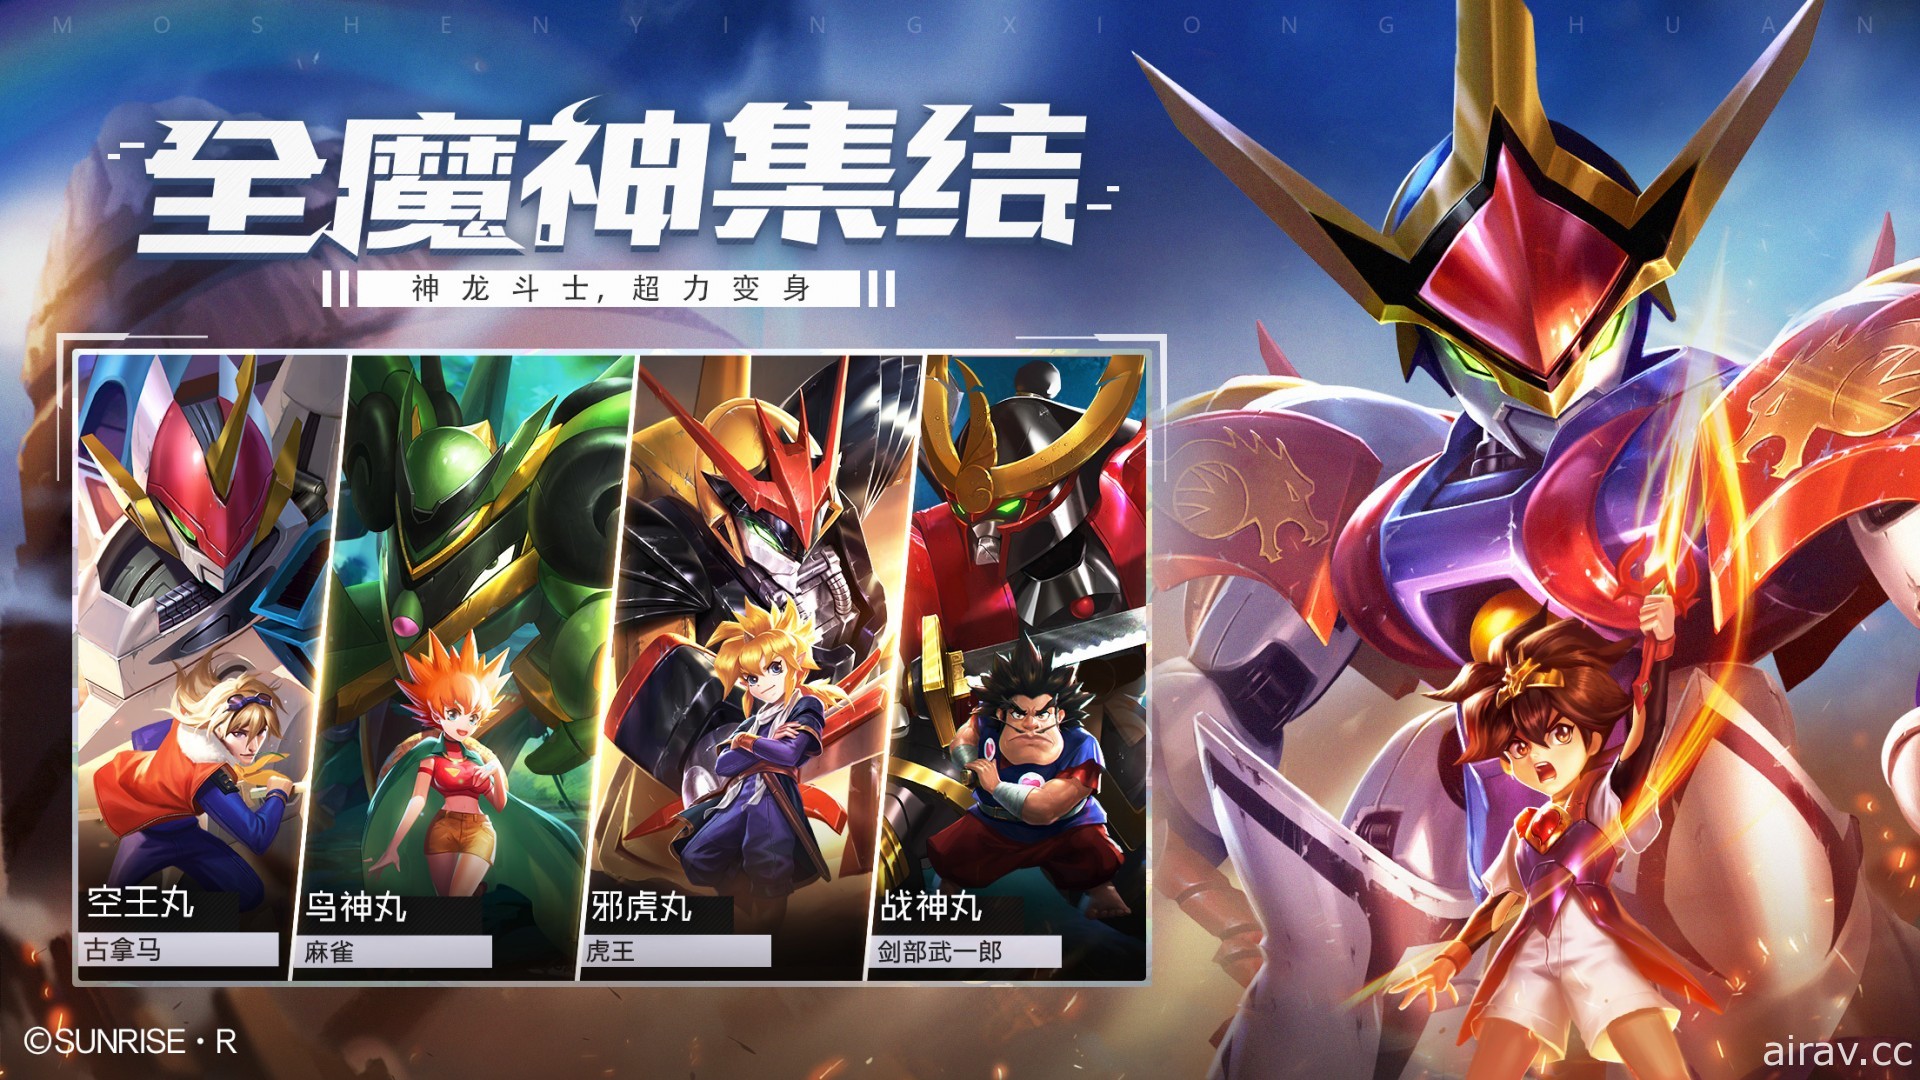 SUNRISE 正版授权《魔神英雄传 - 神龙斗士》于中国开放 iOS 版预先注册